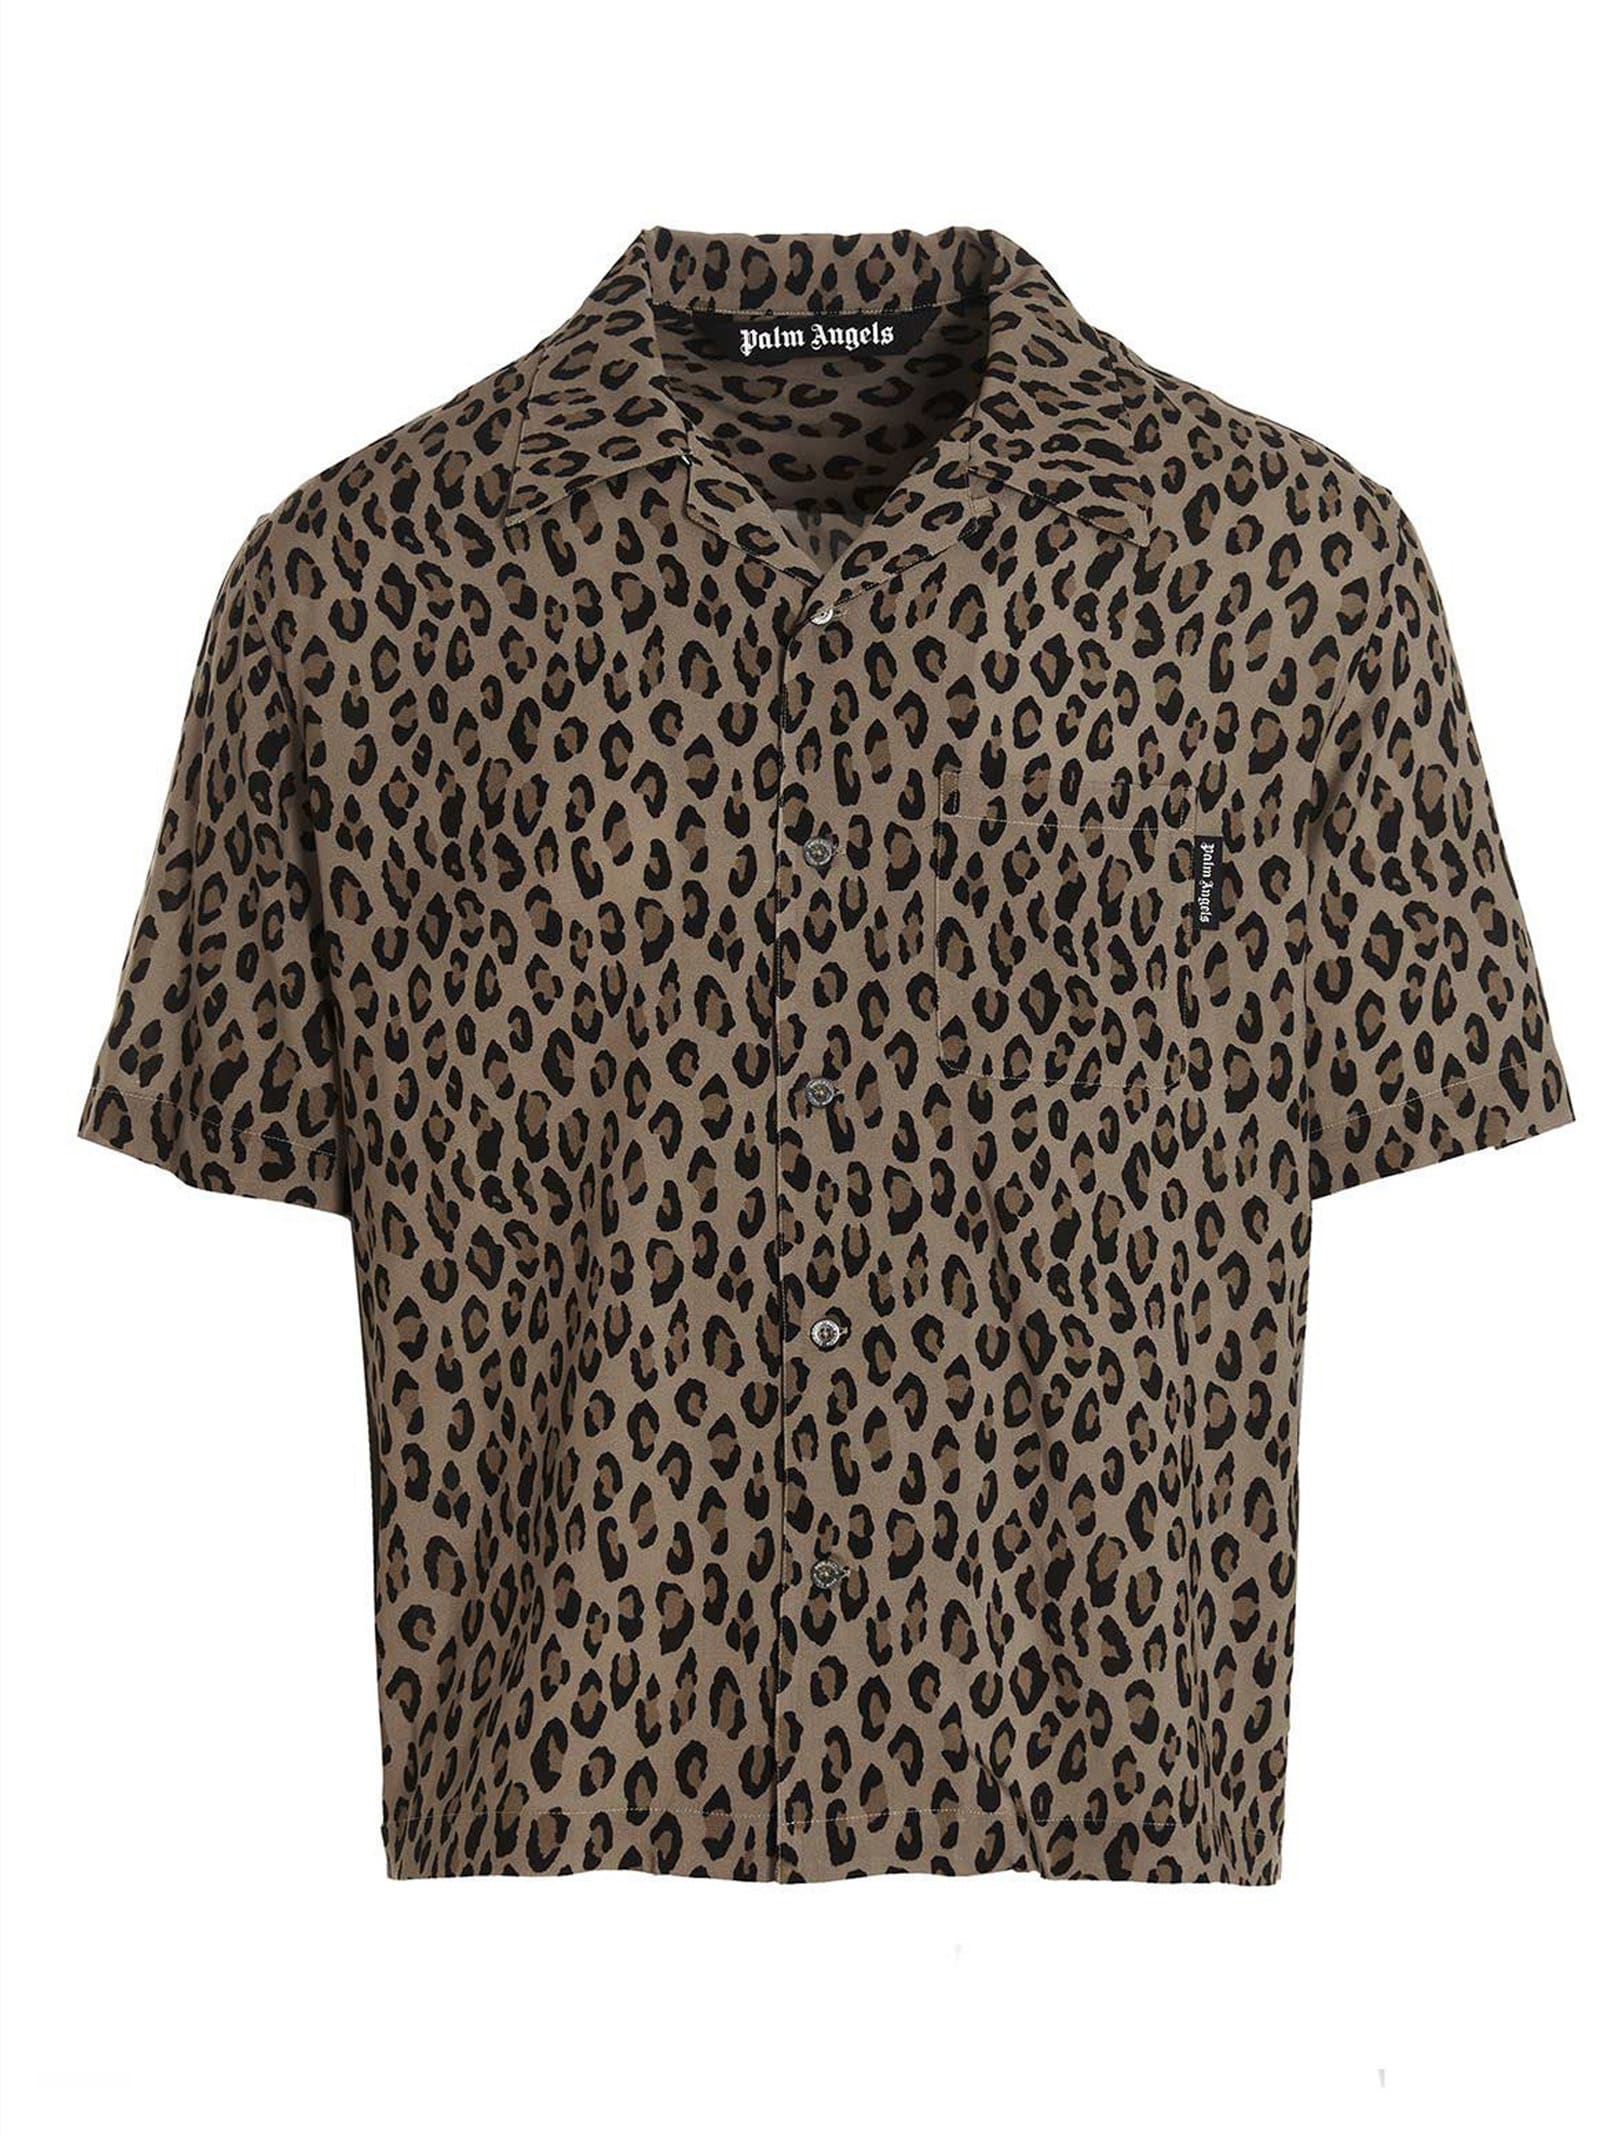 Palm Angels leopard Bowling Shirt